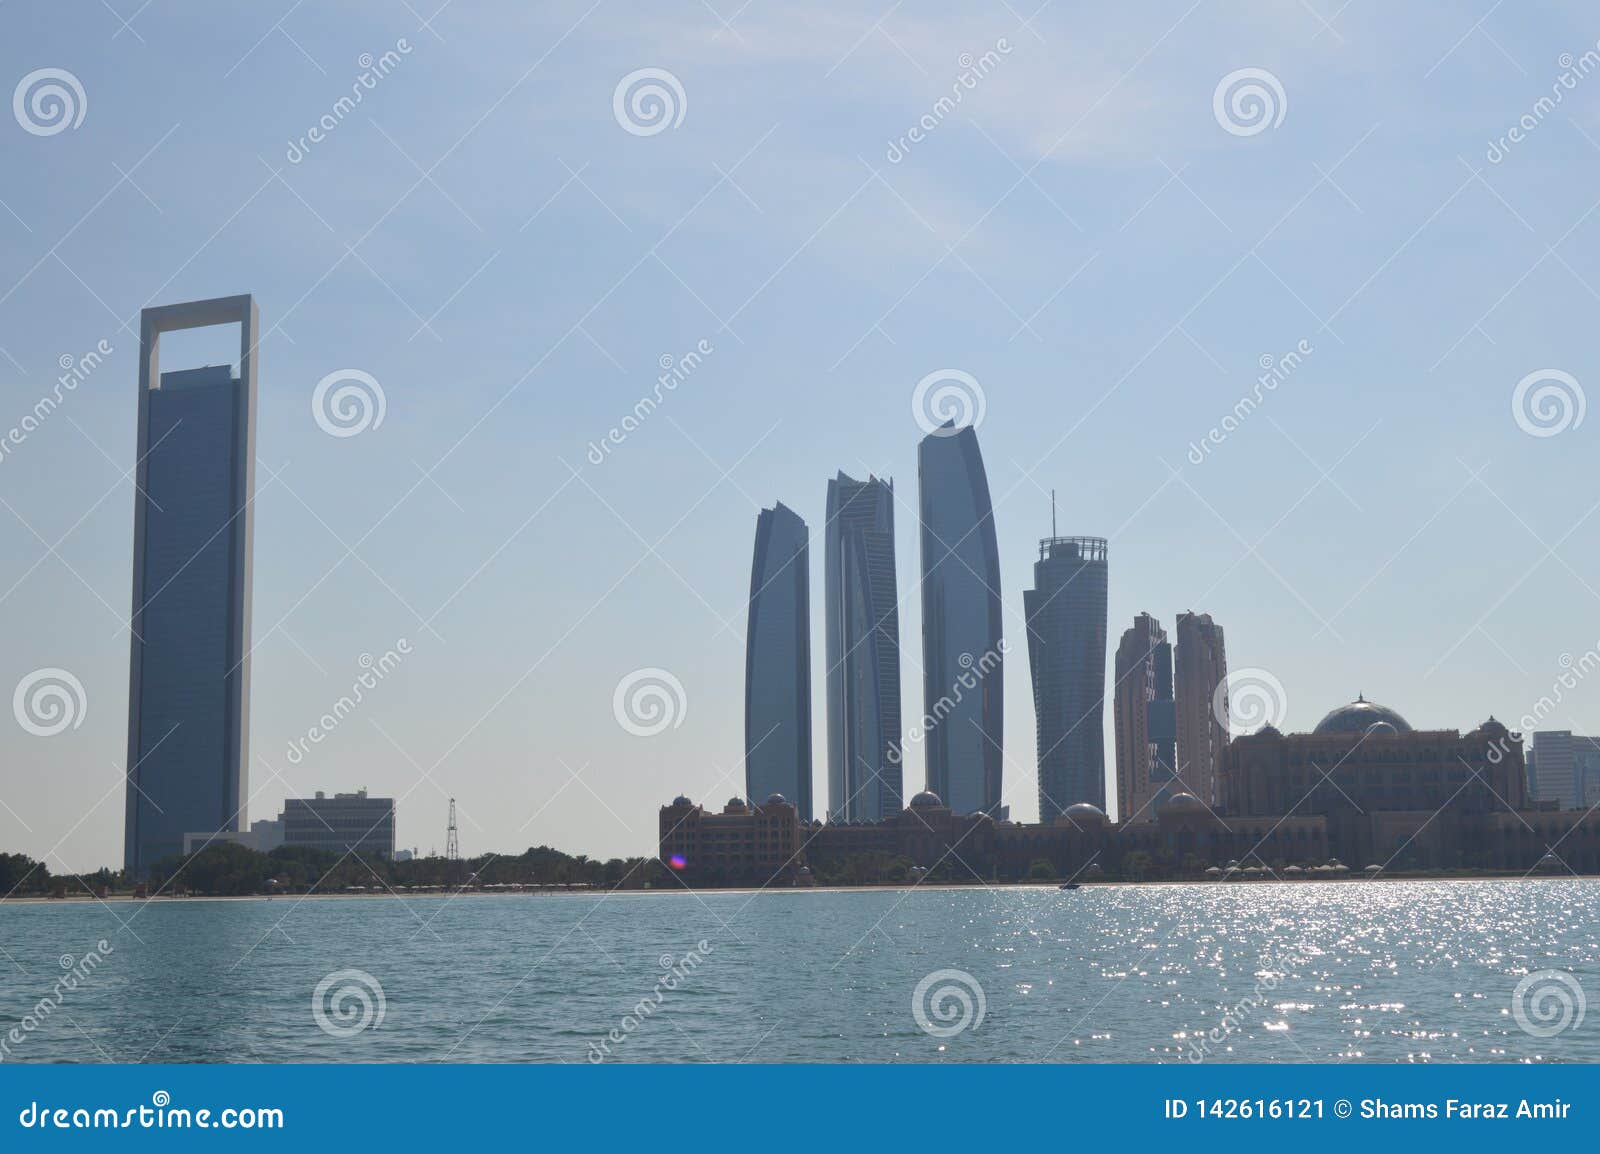 Abu Dhabi City Skyline Along Corniche Beach Taken From A Boat